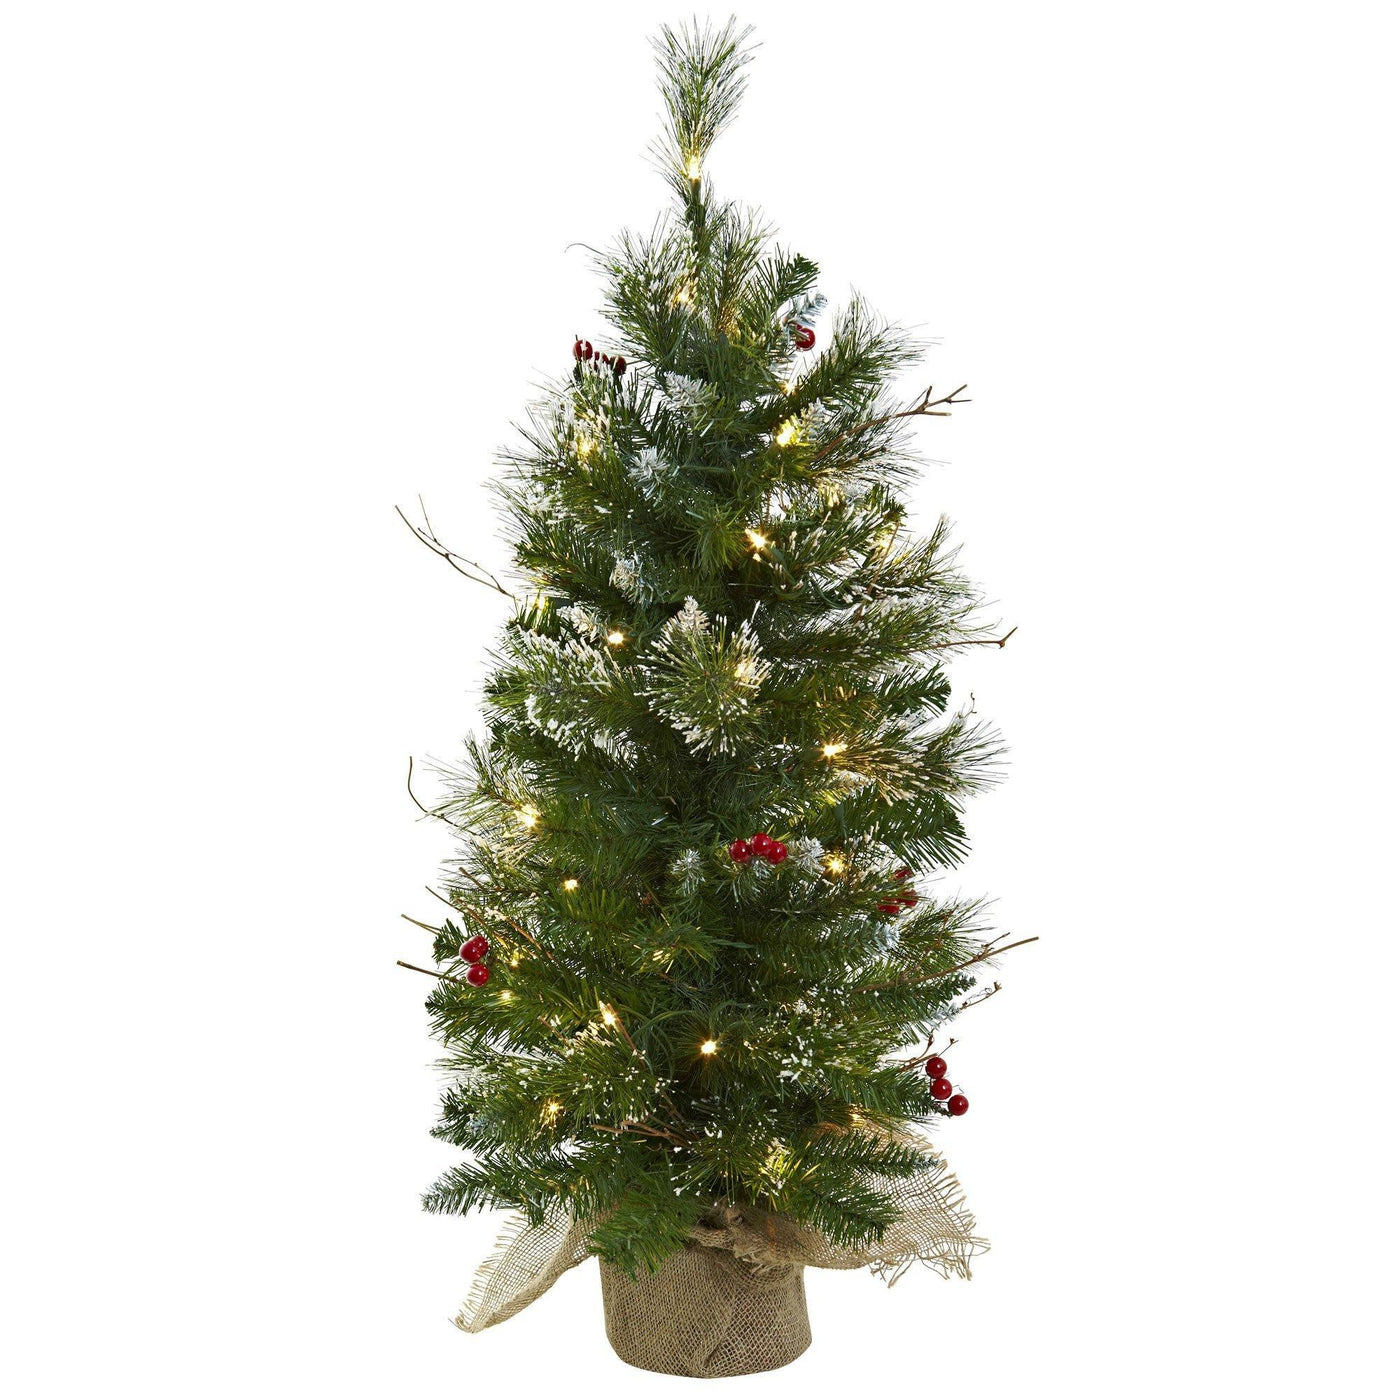 46” Mini Cedar Artificial Pine Tree in Decorative Urn UV Resistant